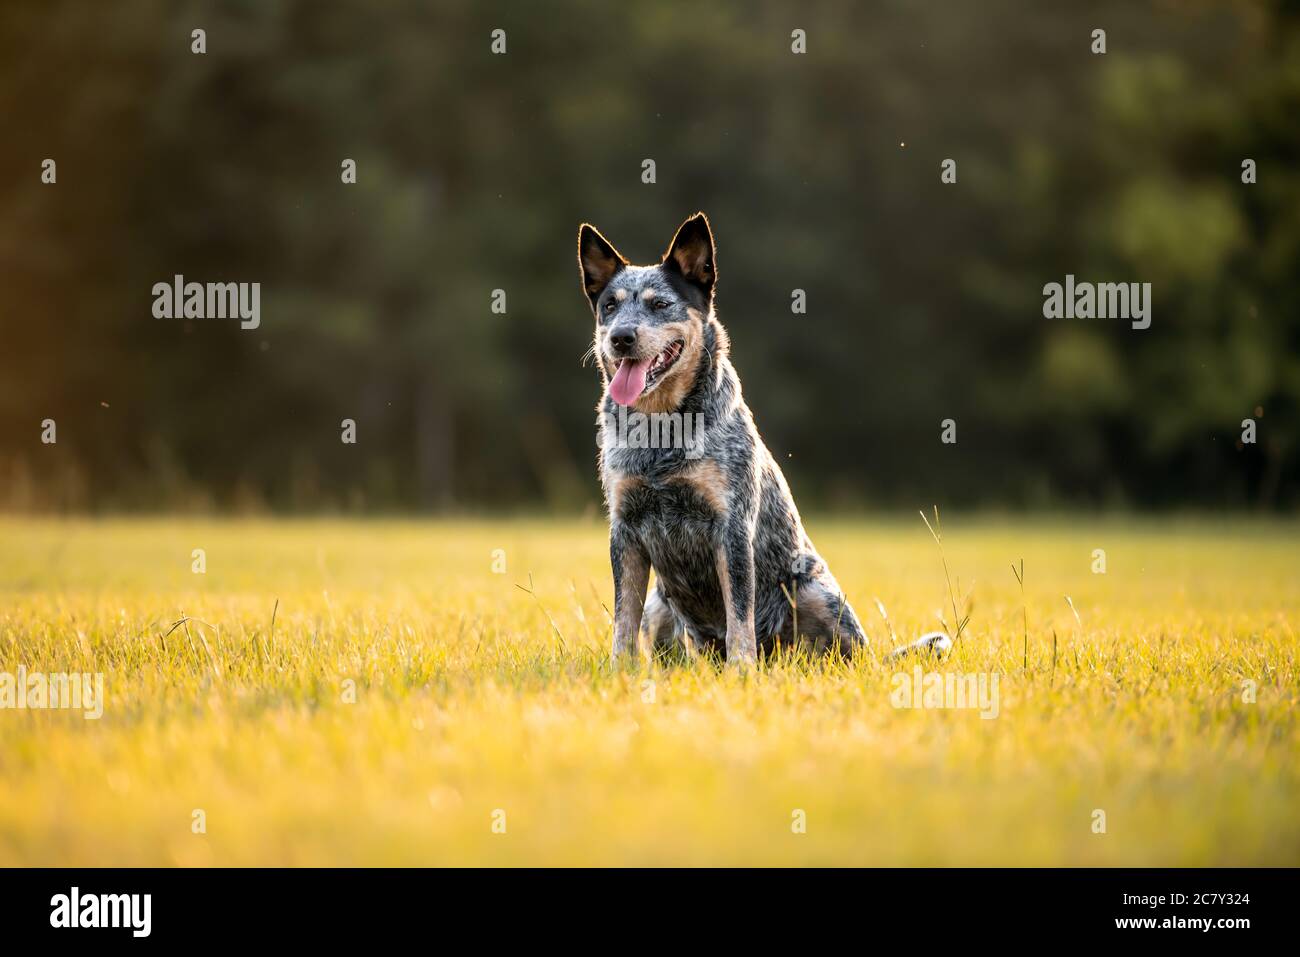 Australian Dog Heeler sitting in a grassy at sunset Stock Photo - Alamy